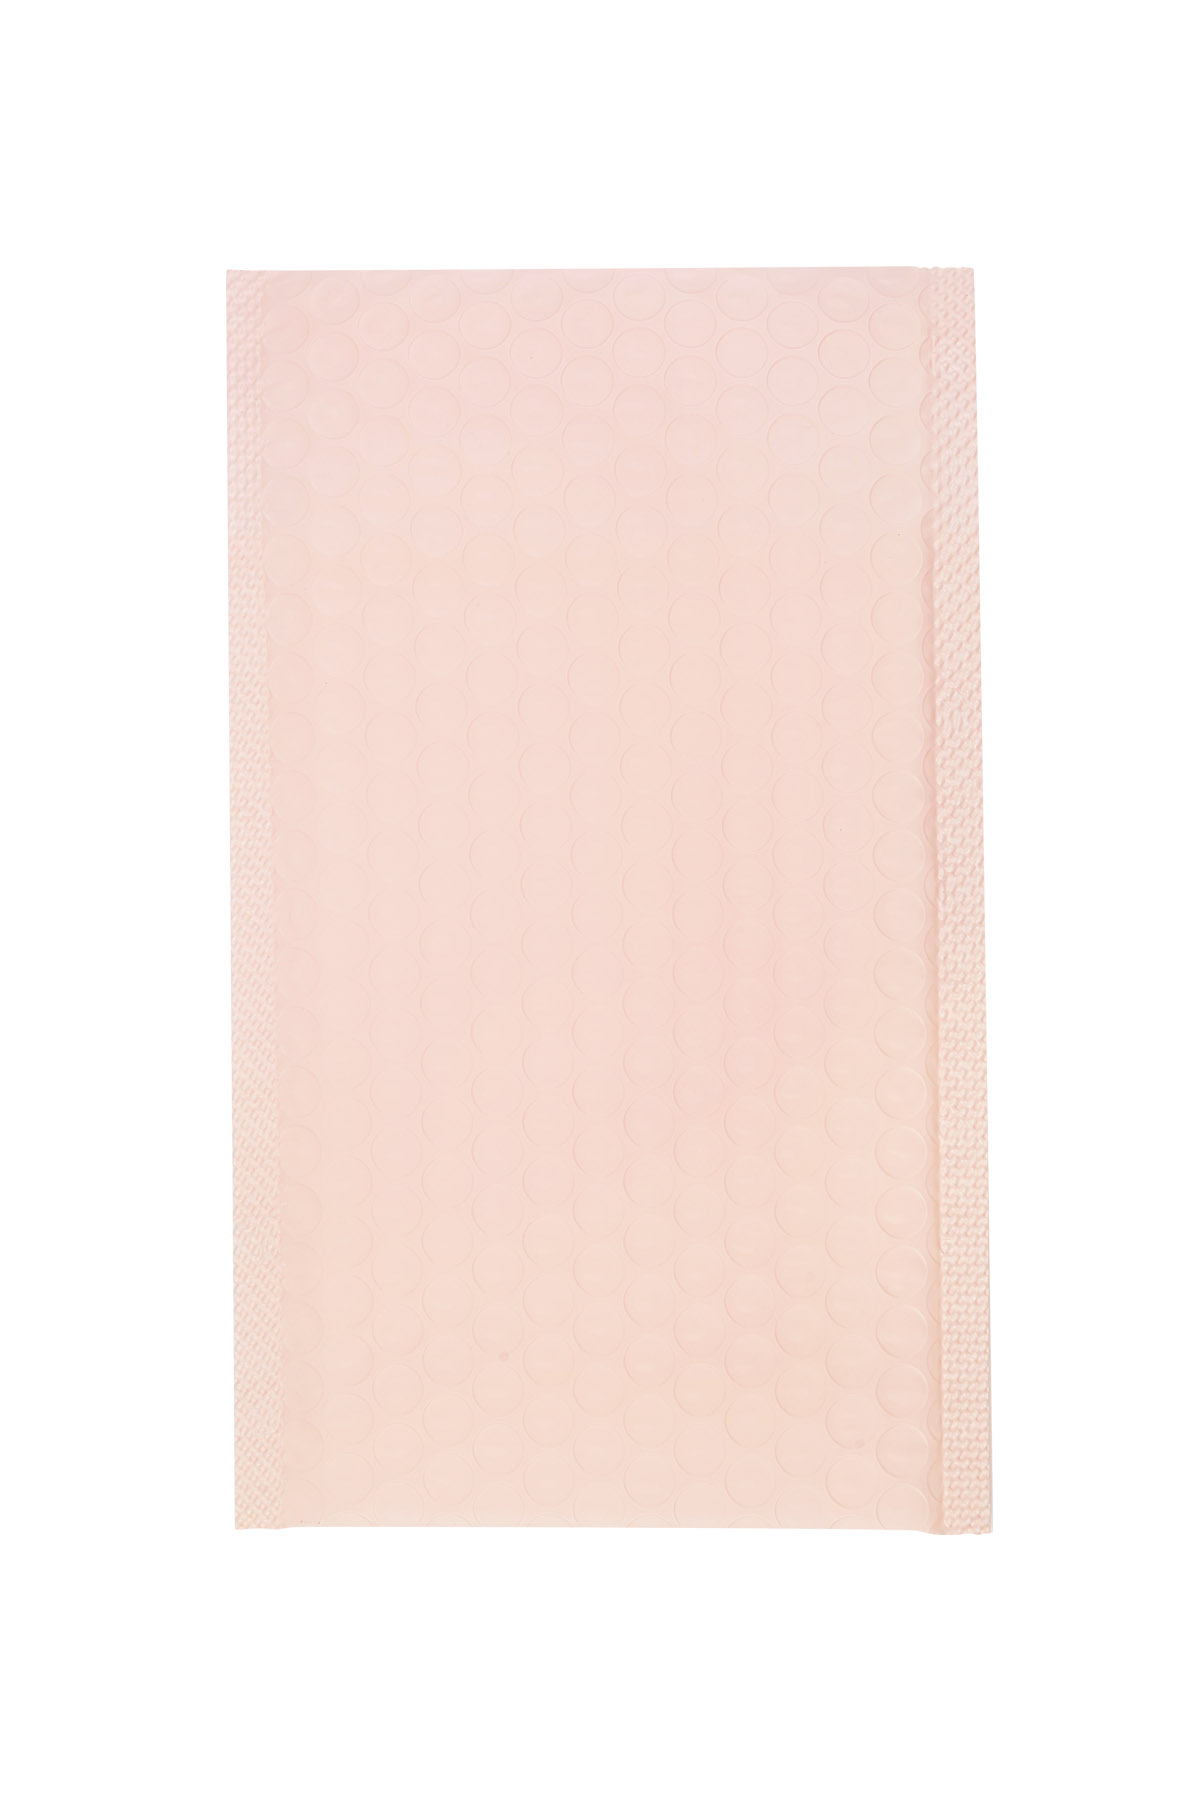 Sac postal bulle - rose pastel Plastique h5 